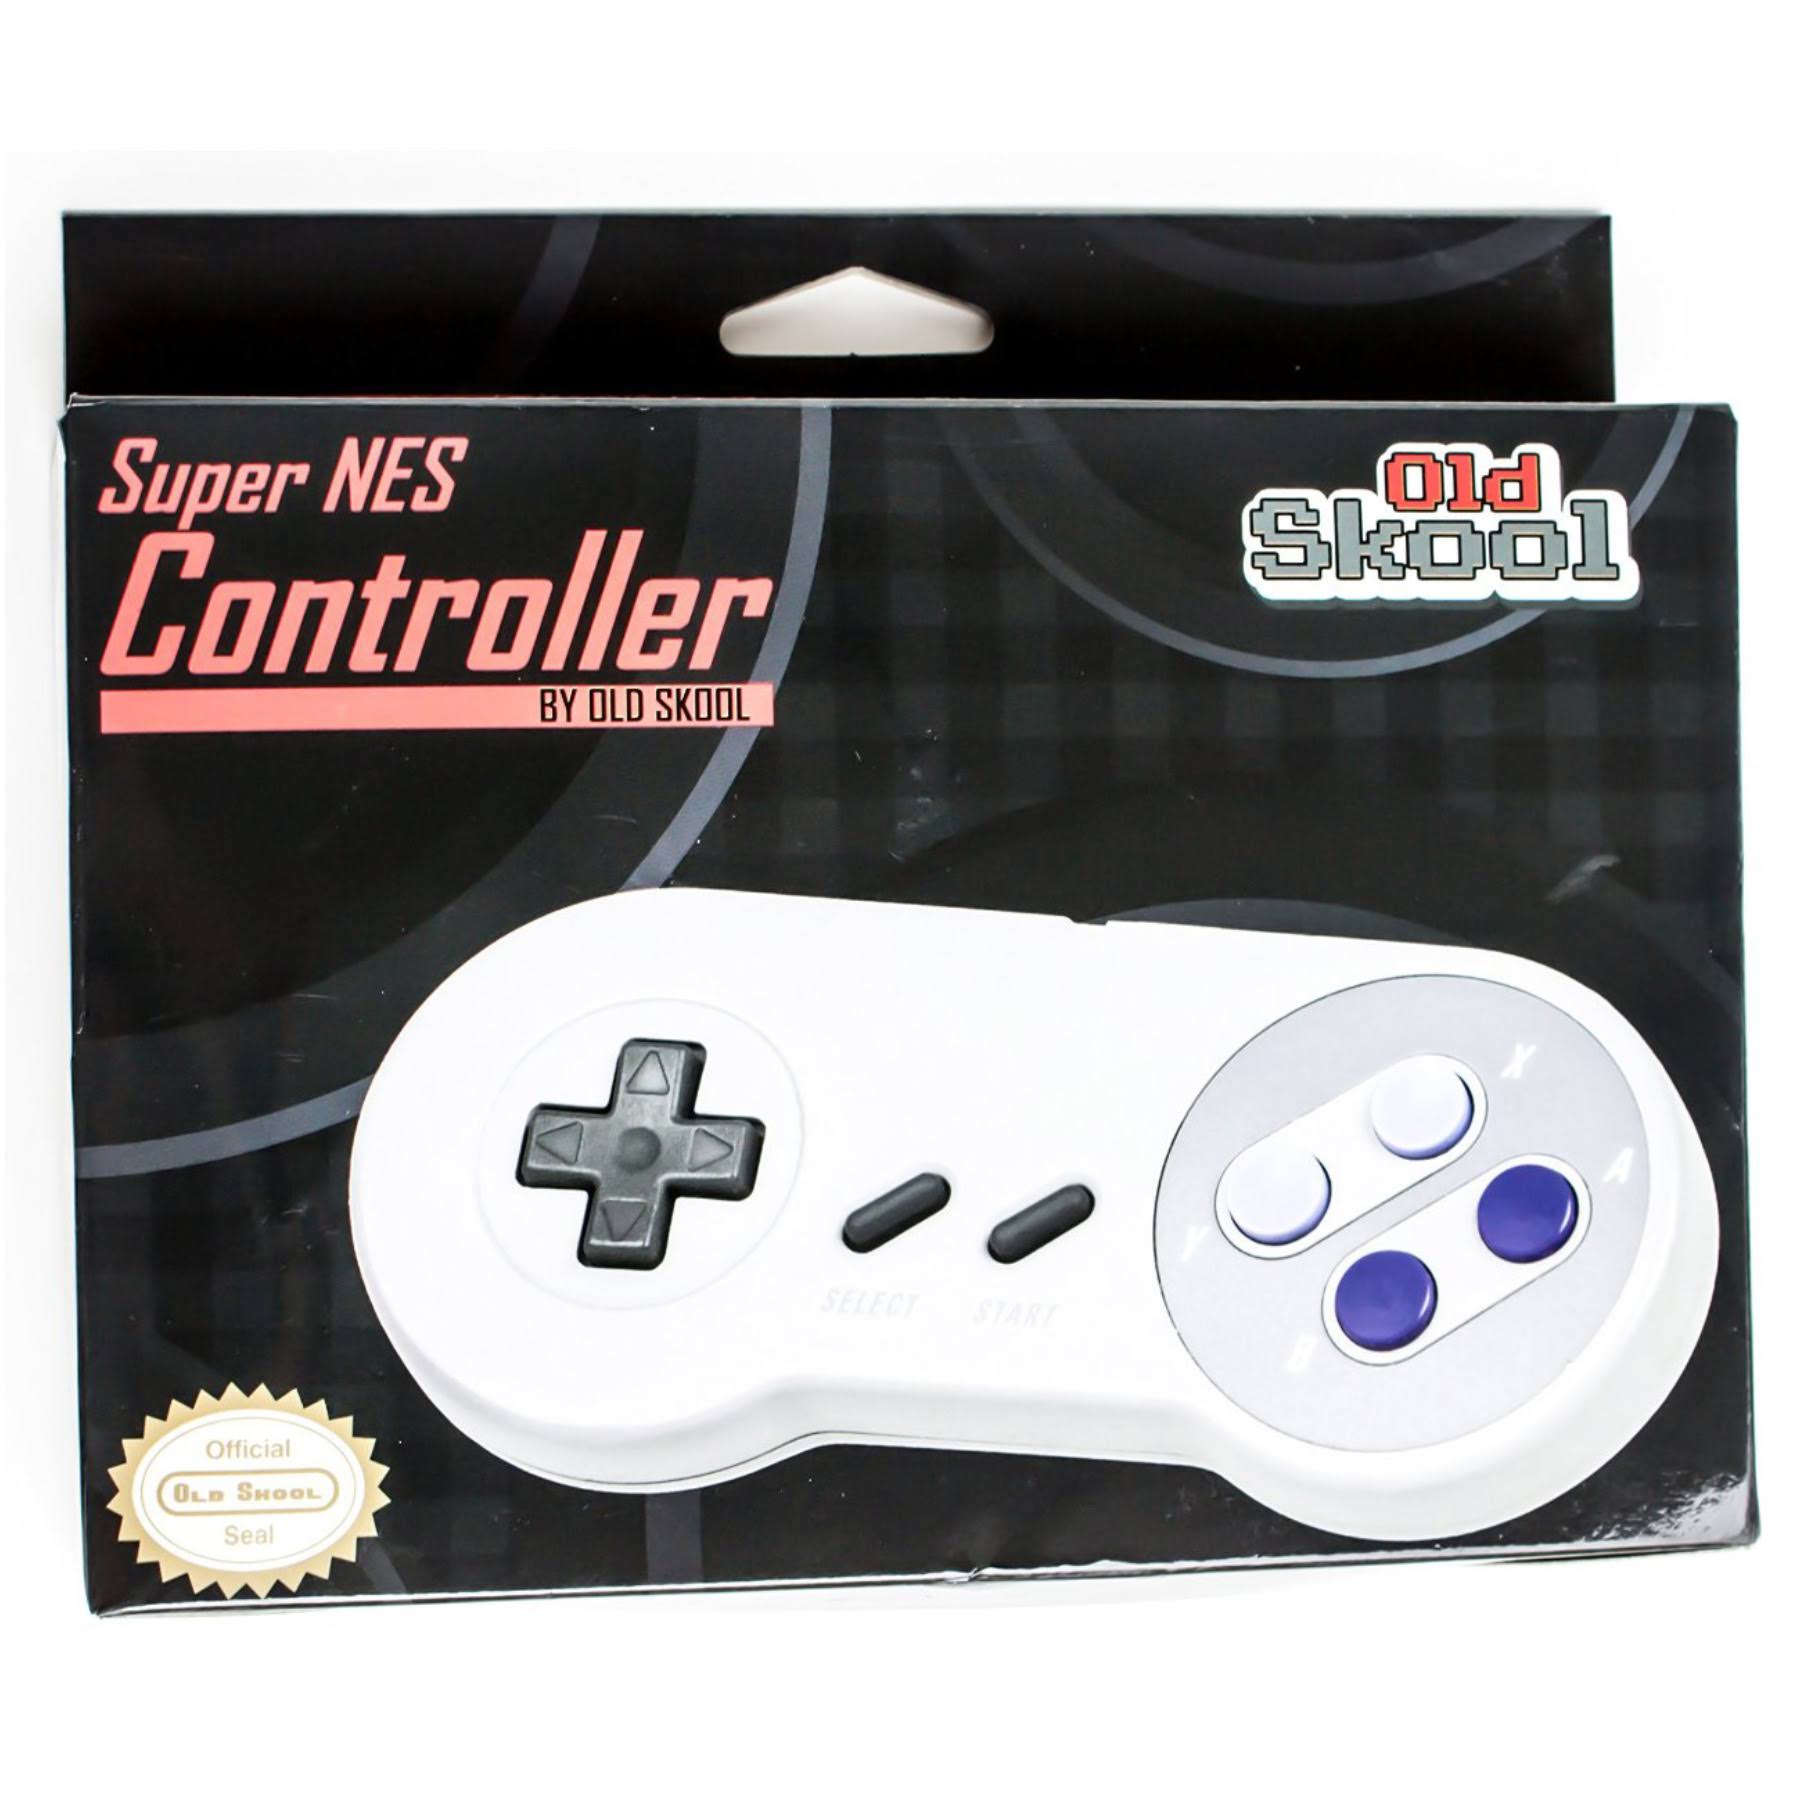 Old Skool SNES Super Nintendo Controller Game Pad